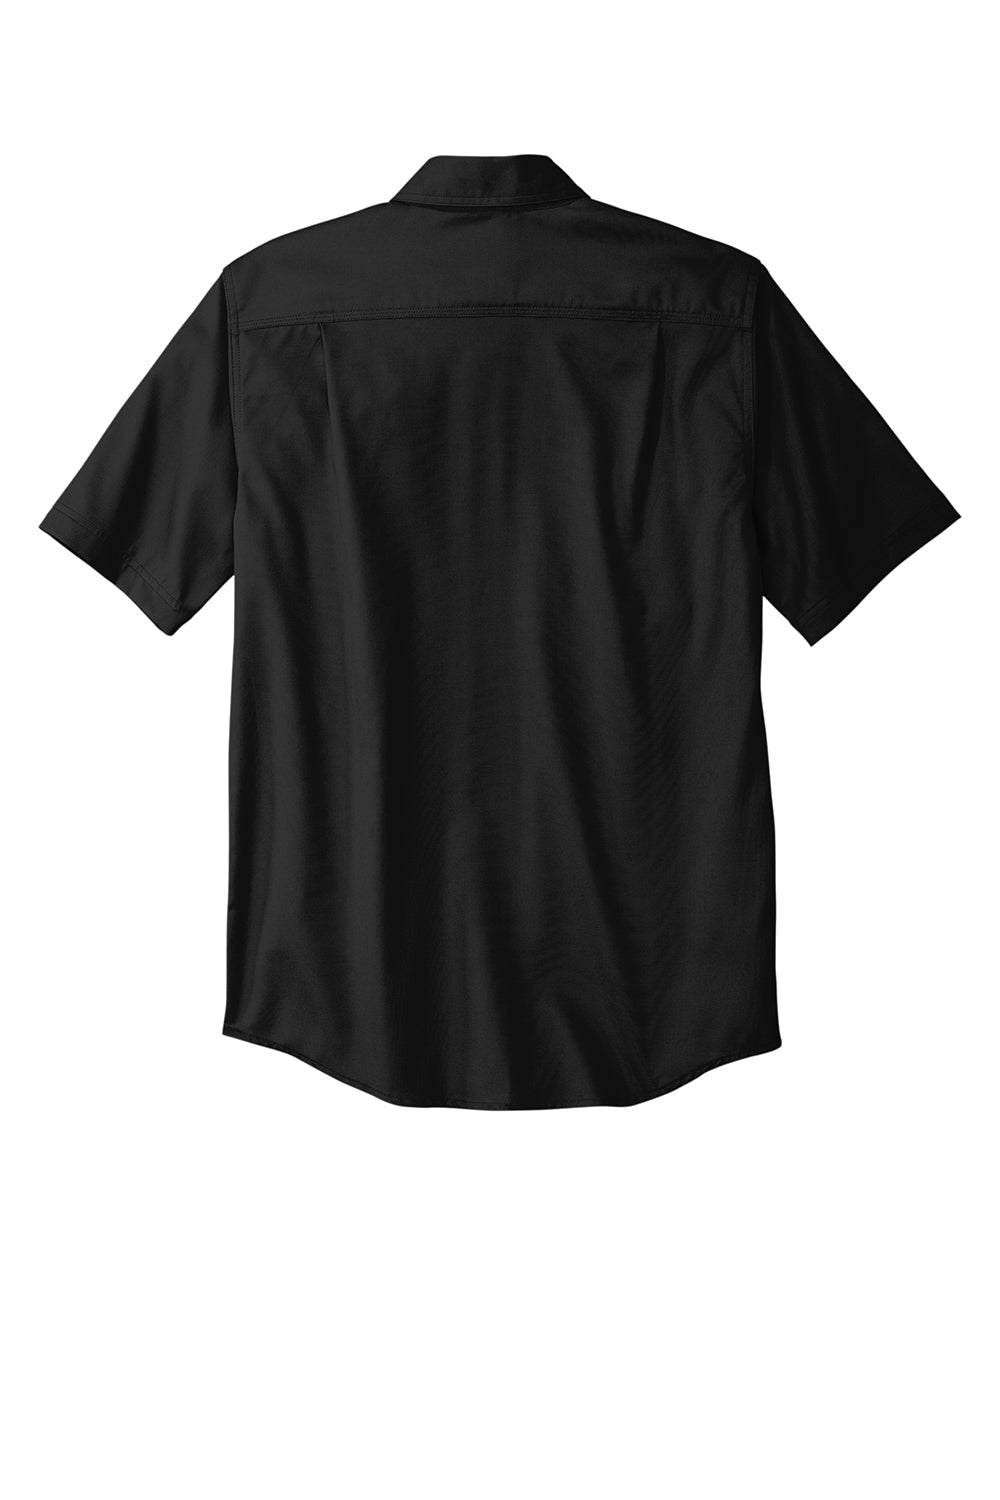 Carhartt CT102537 Mens Rugged Professional Series Wrinkle Resistant Short Sleeve Button Down Shirt w/ Pocket Black Flat Back